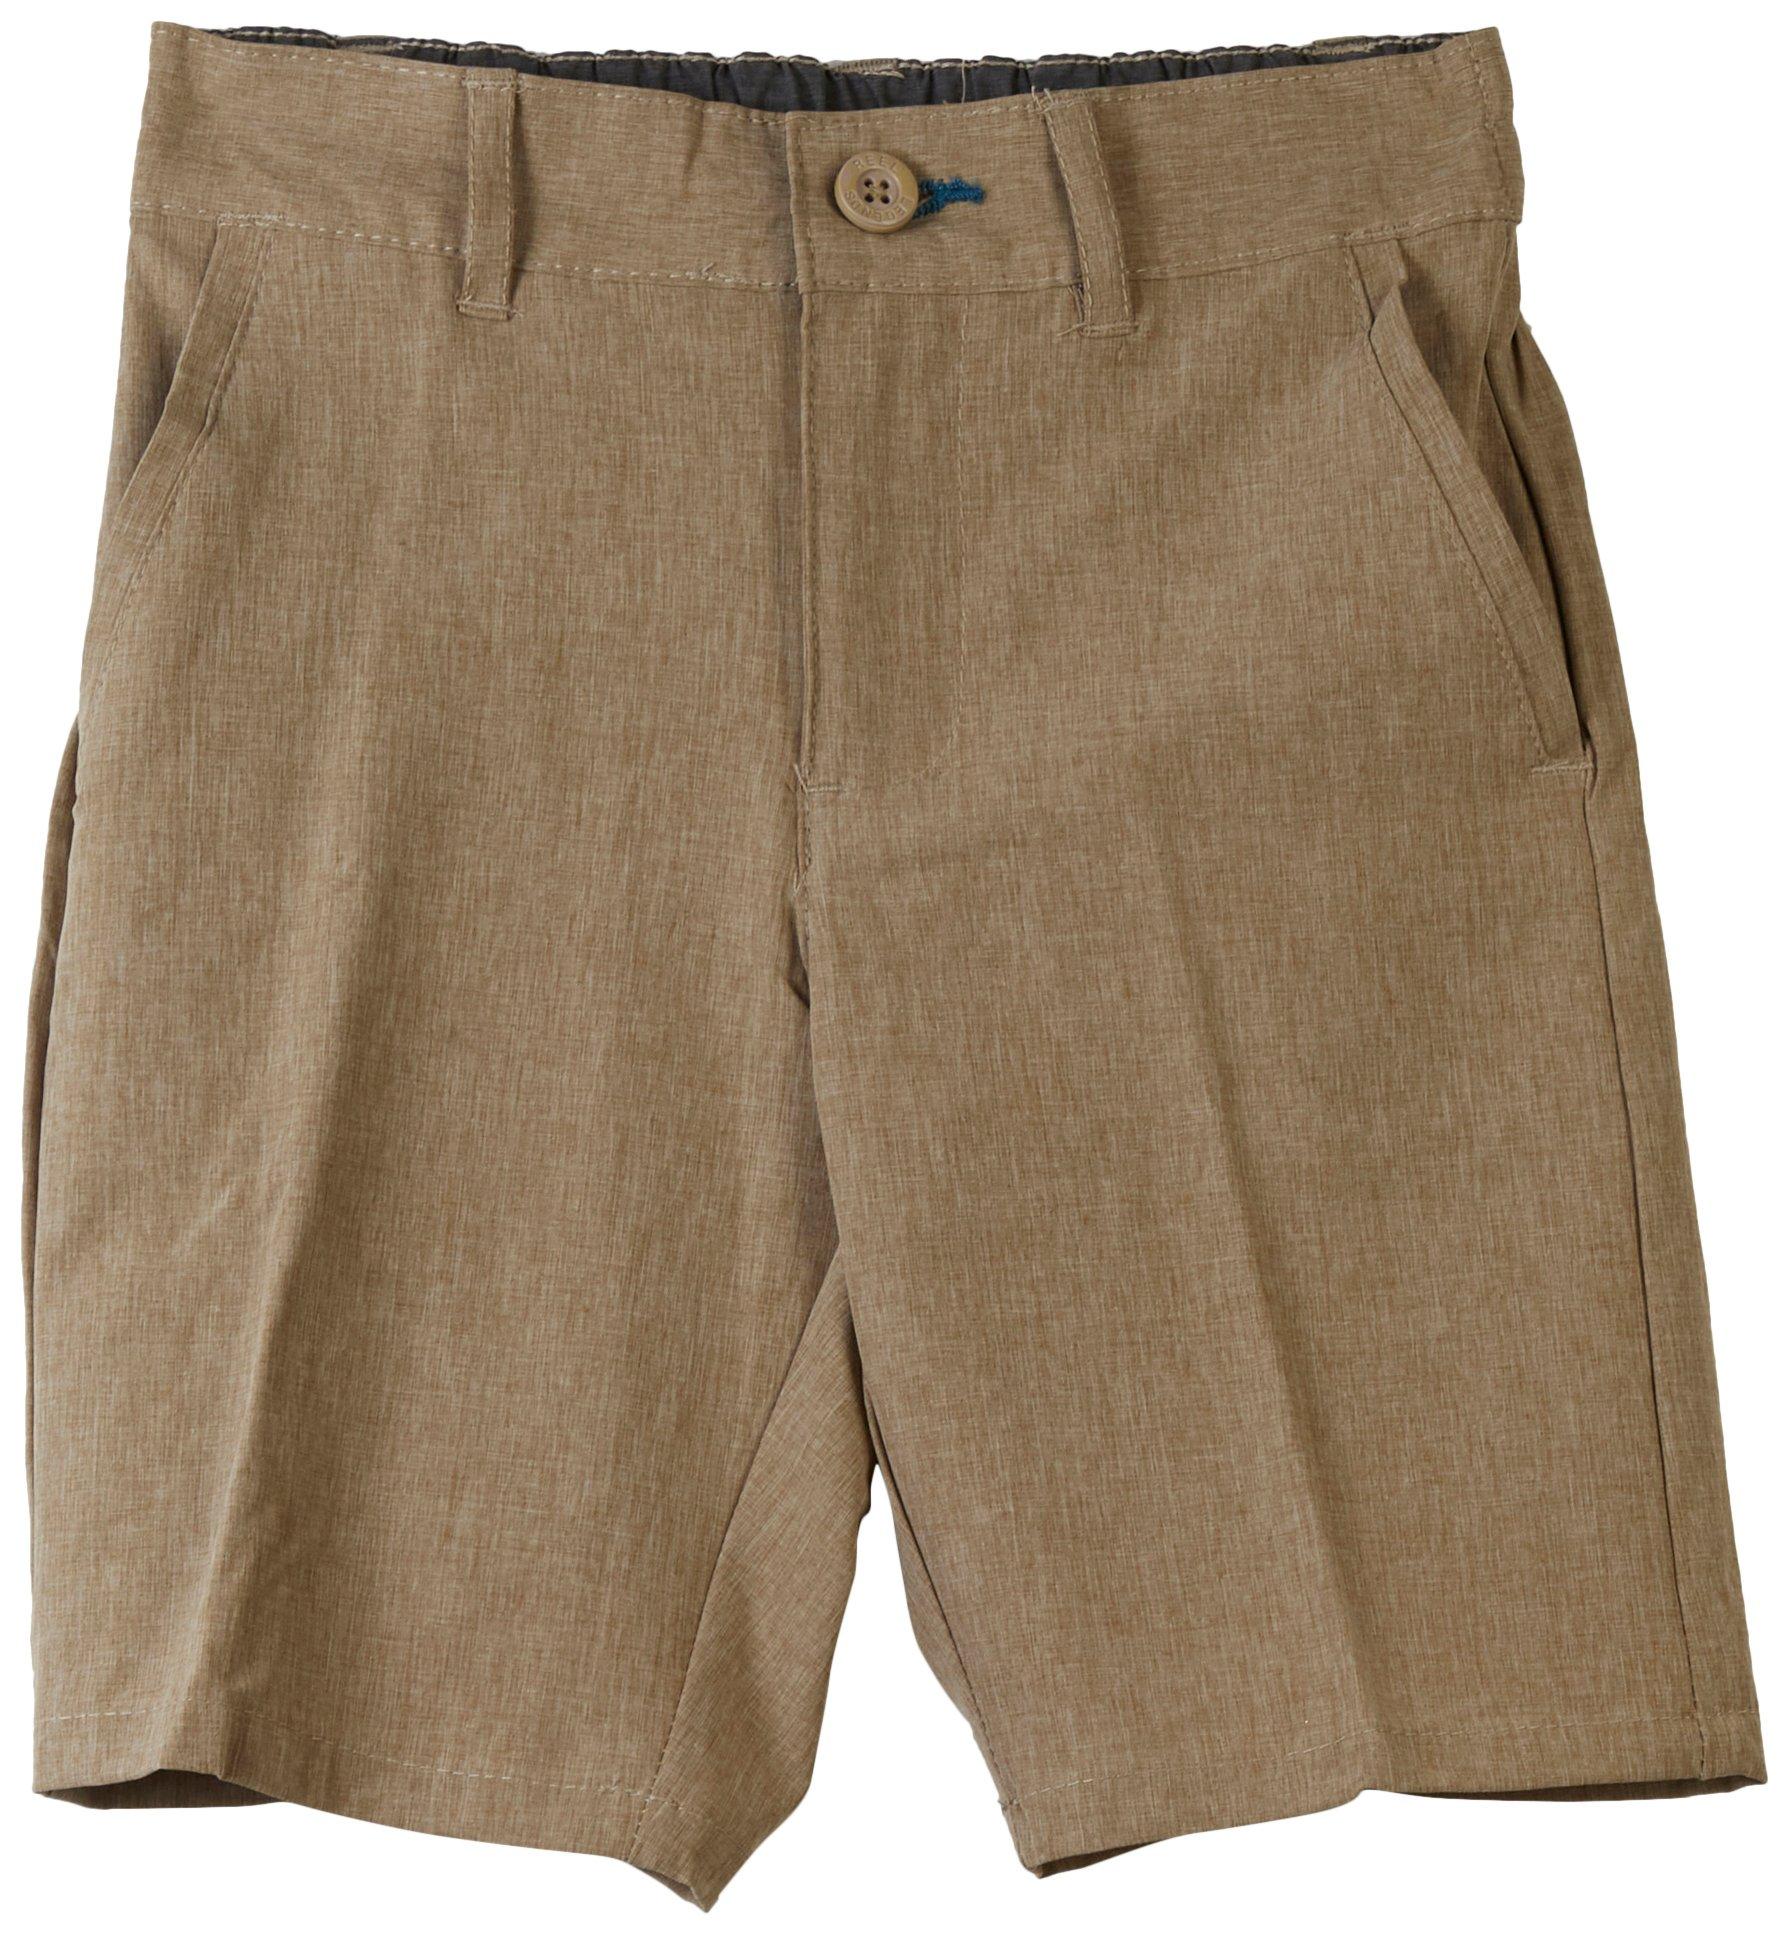 Reel Legends Little Boys 7.25 in. Solid Cargo Shorts